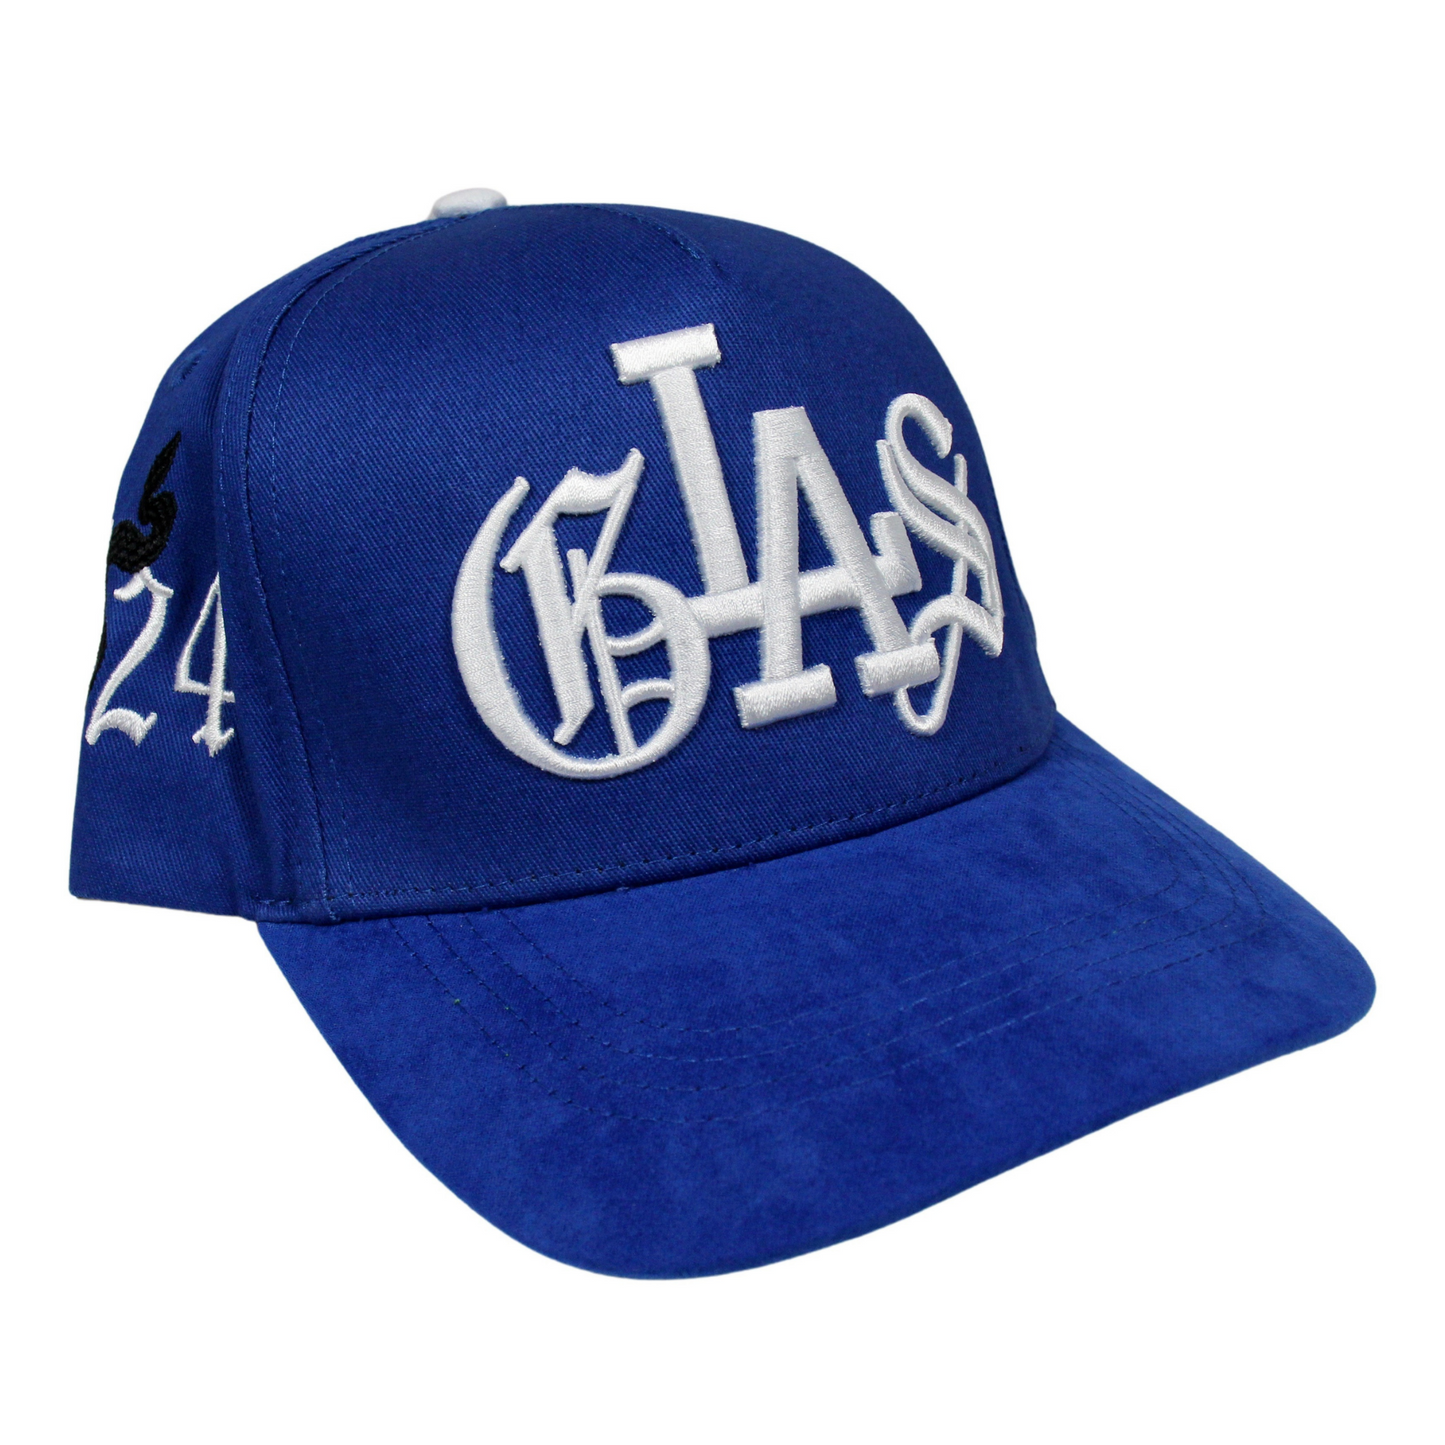 Gas NYC "LA" Hat